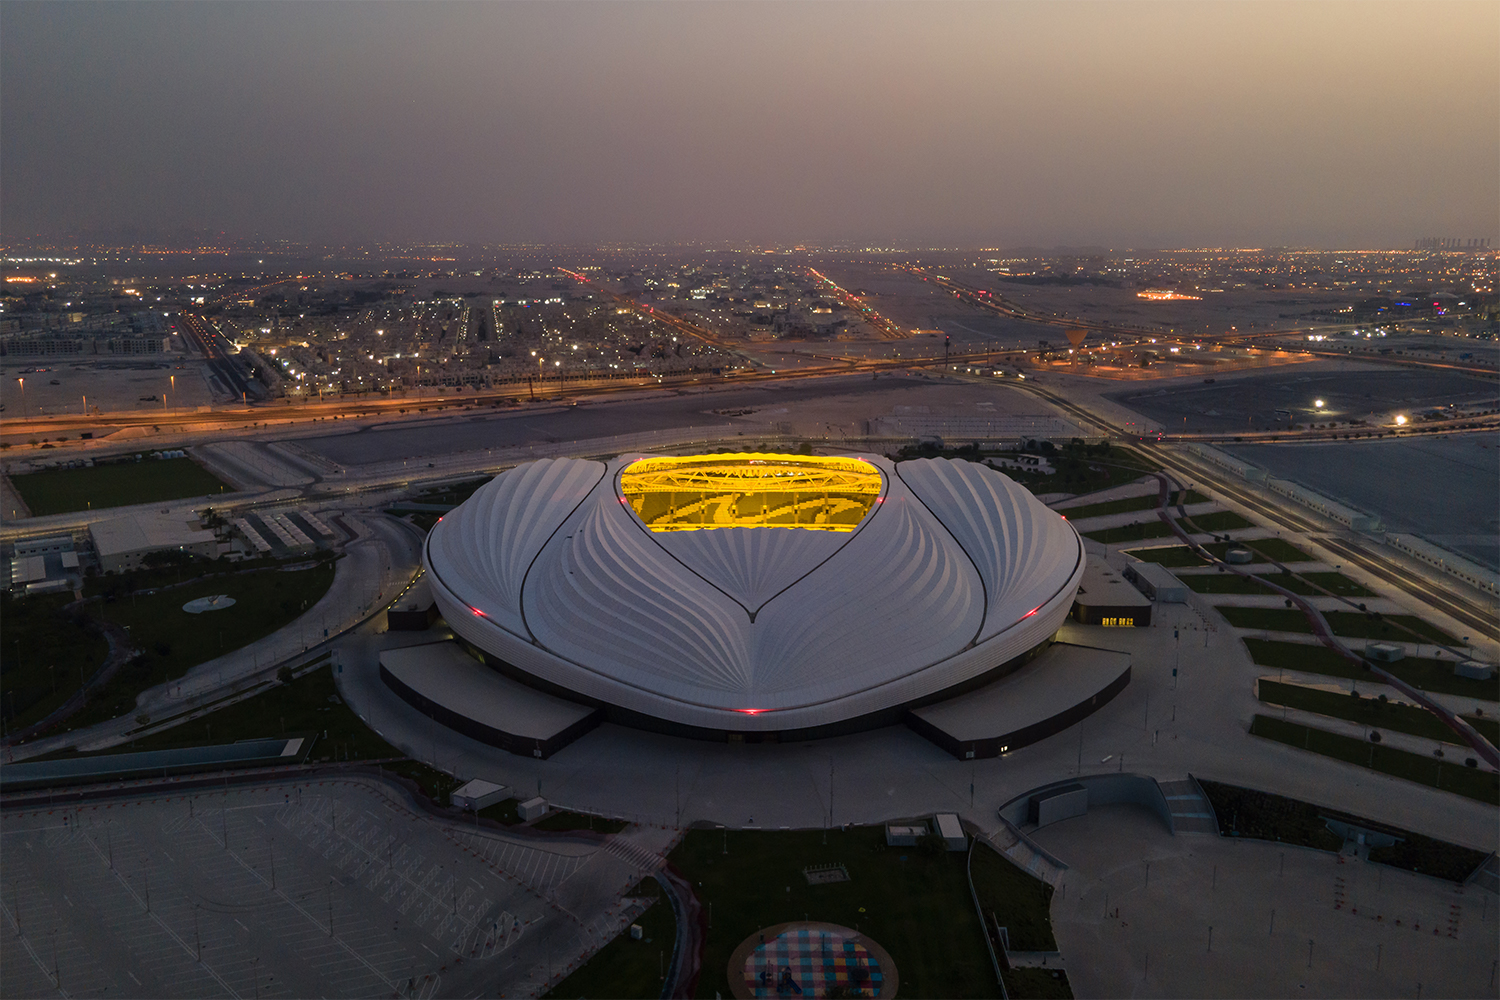 An aerial view of Al Janoub stadium at sunrise on June 21, 2022 in Al Wakrah, Qatar. Al Janoub stadium is a host venue of the FIFA World Cup Qatar 2022 starting in November.